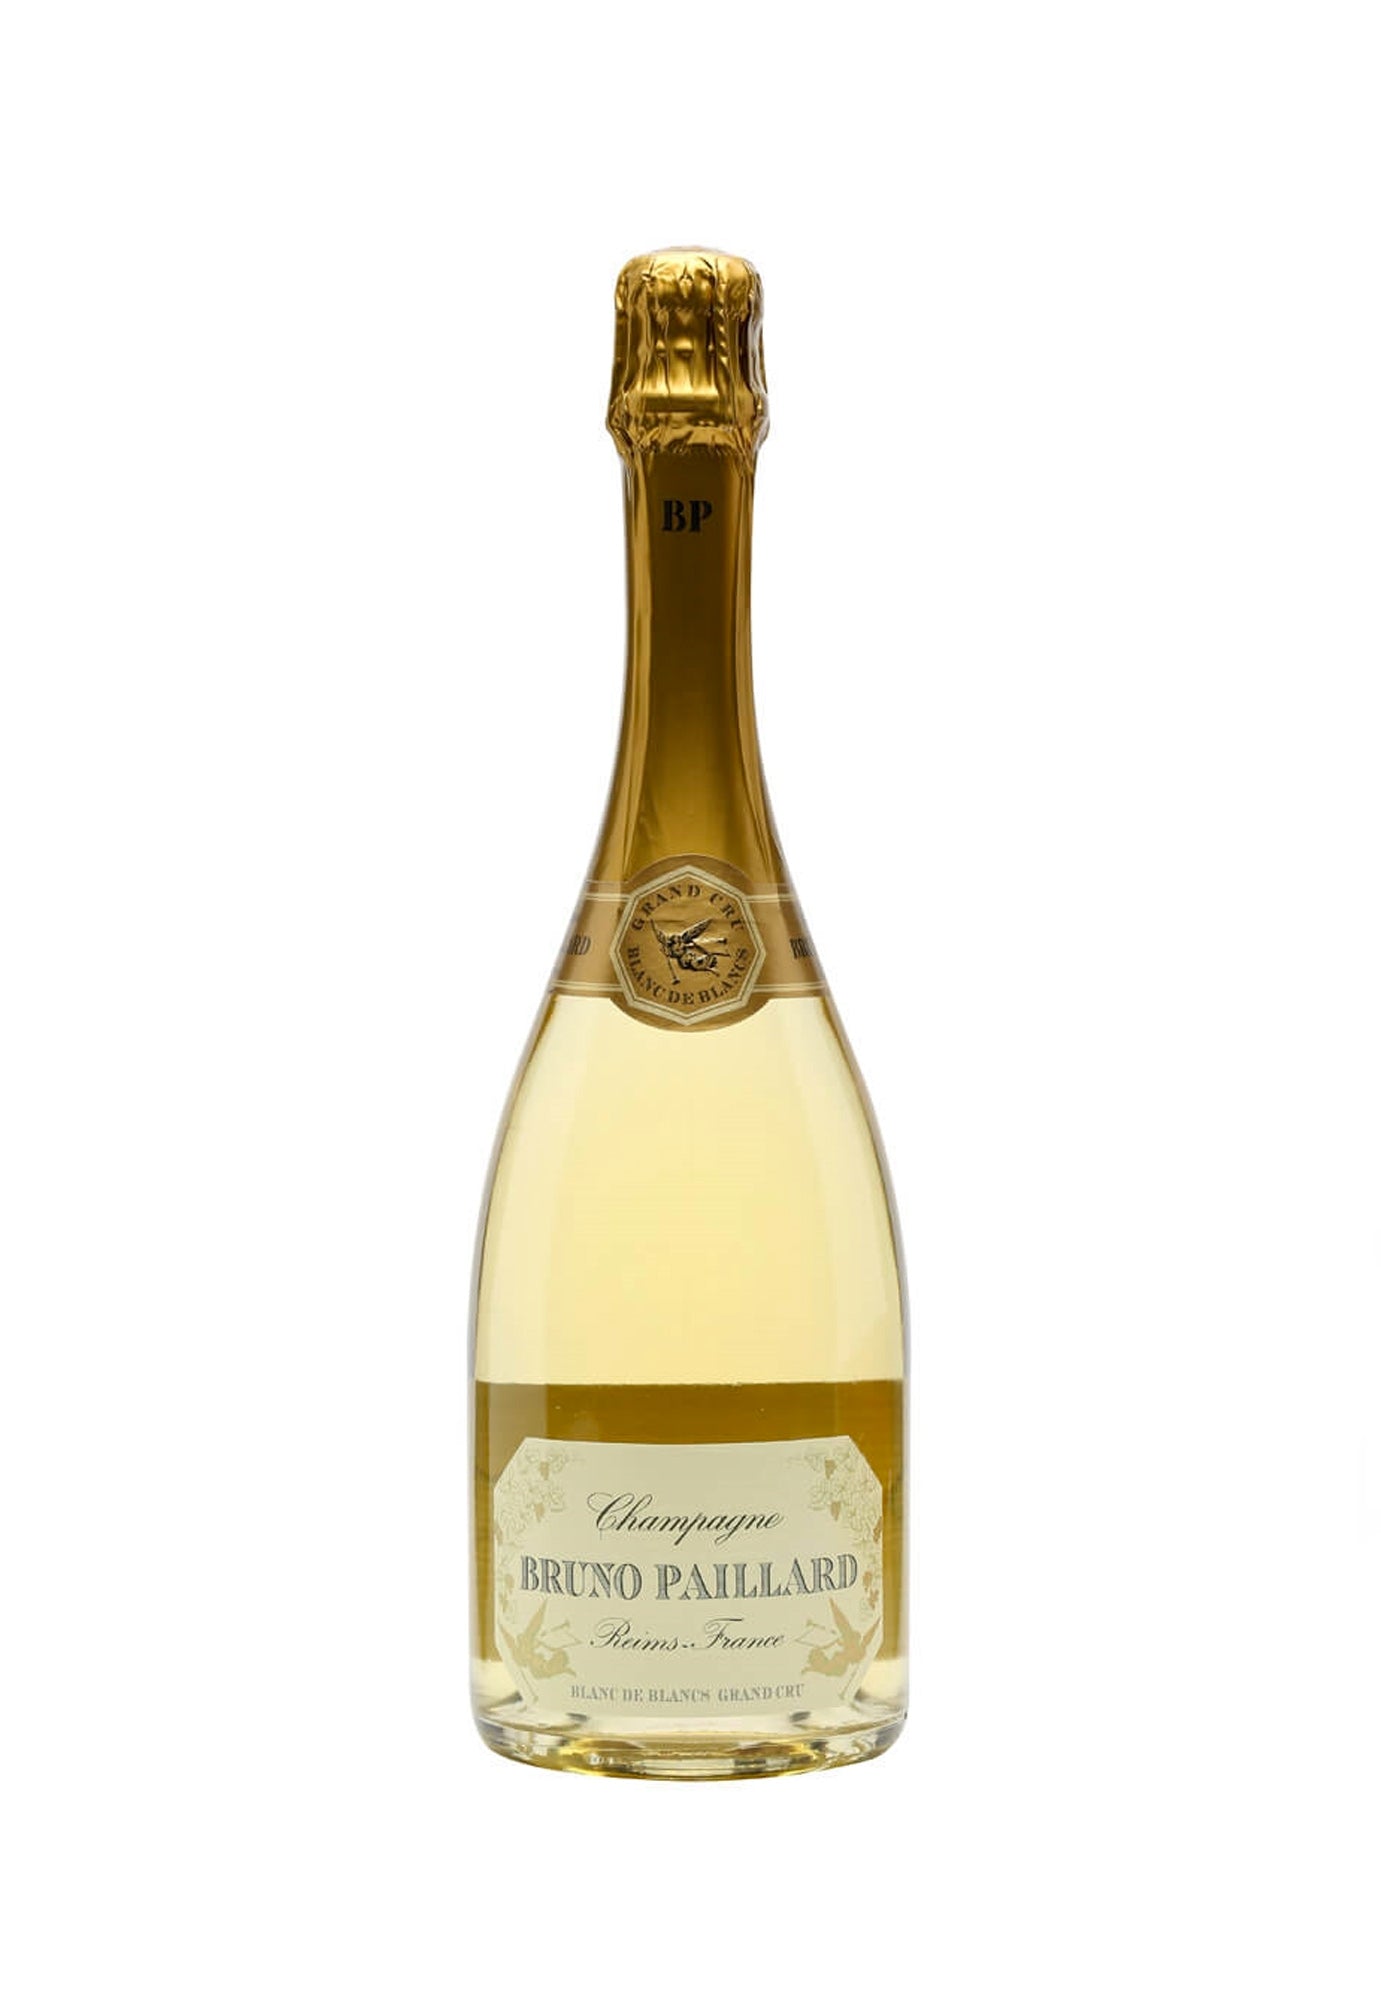 Bruno Paillard Champagne Blanc de Blancs Grand Cru (NV)